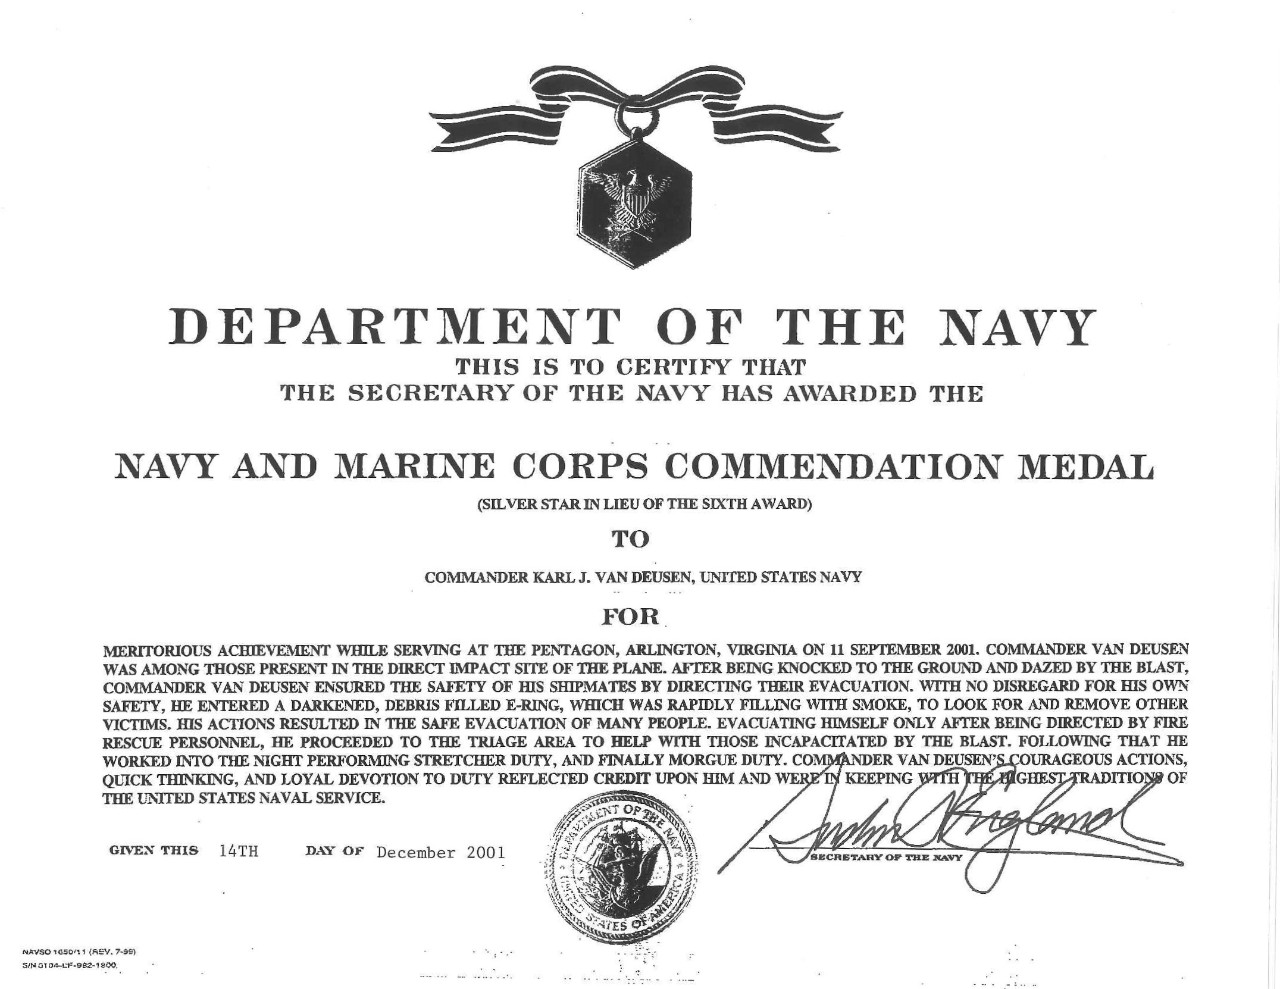 Van Deusen, Karl CDR Navy and Marine Corps Commendation Medal